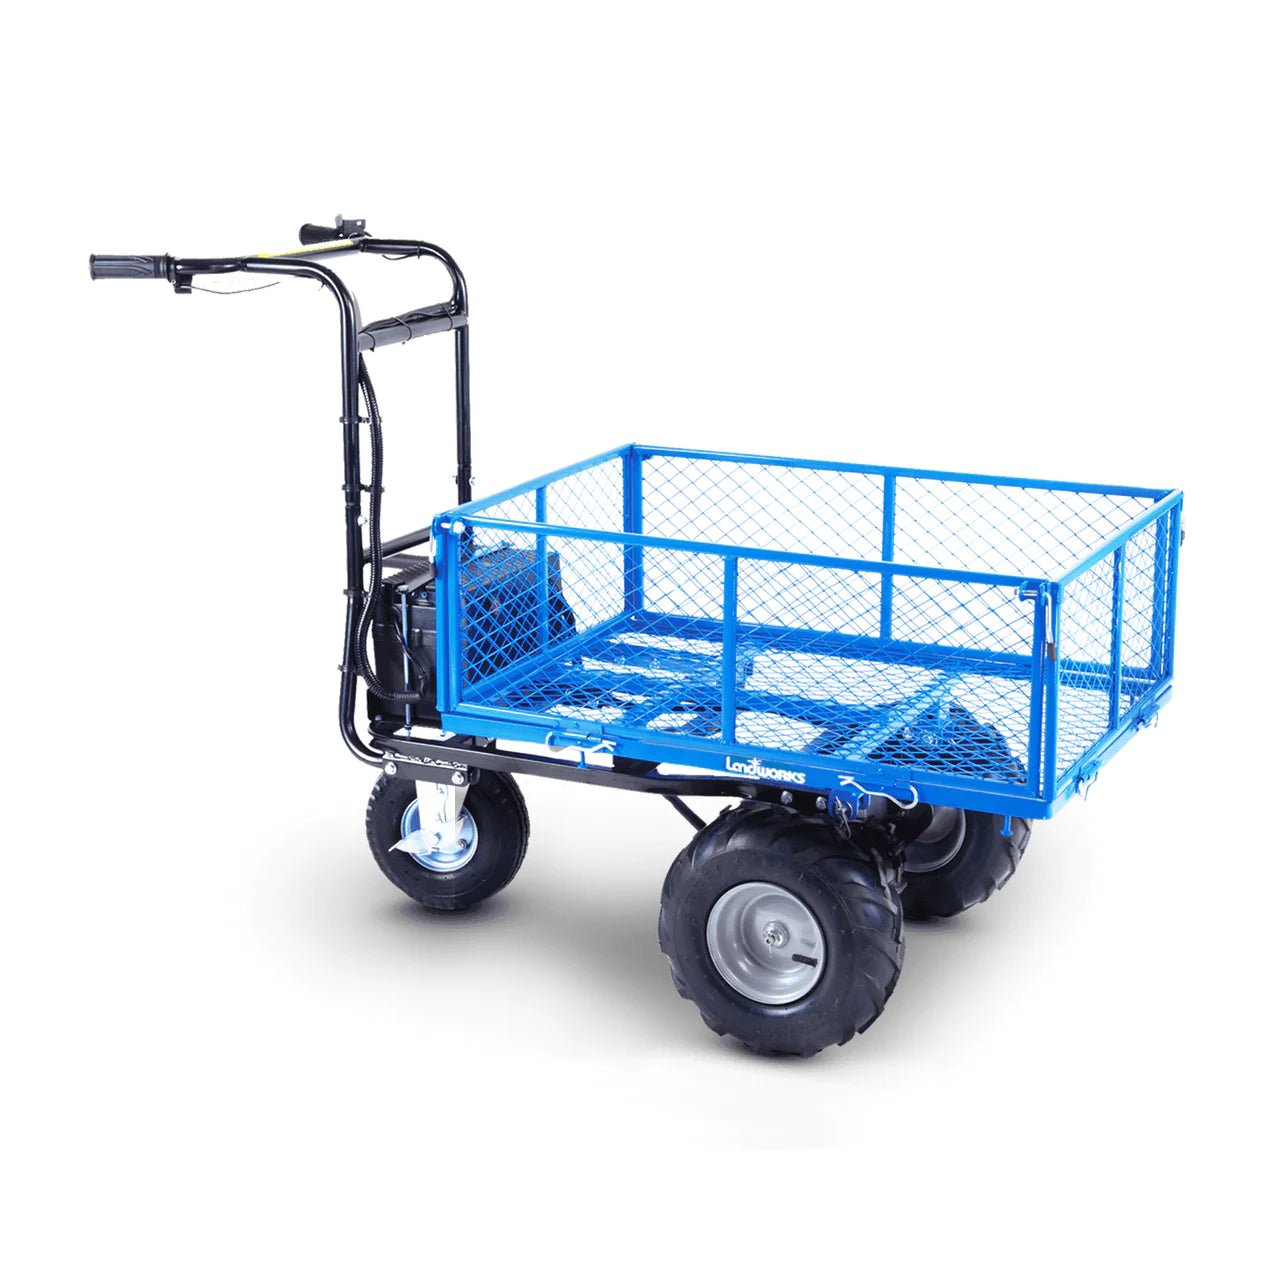 Landworks Self-Propelled Electric Utility Cart - 48V 7Ah AGM, 500LB Hauling Capacity SKU: GUO010 - Prime Yard Tools